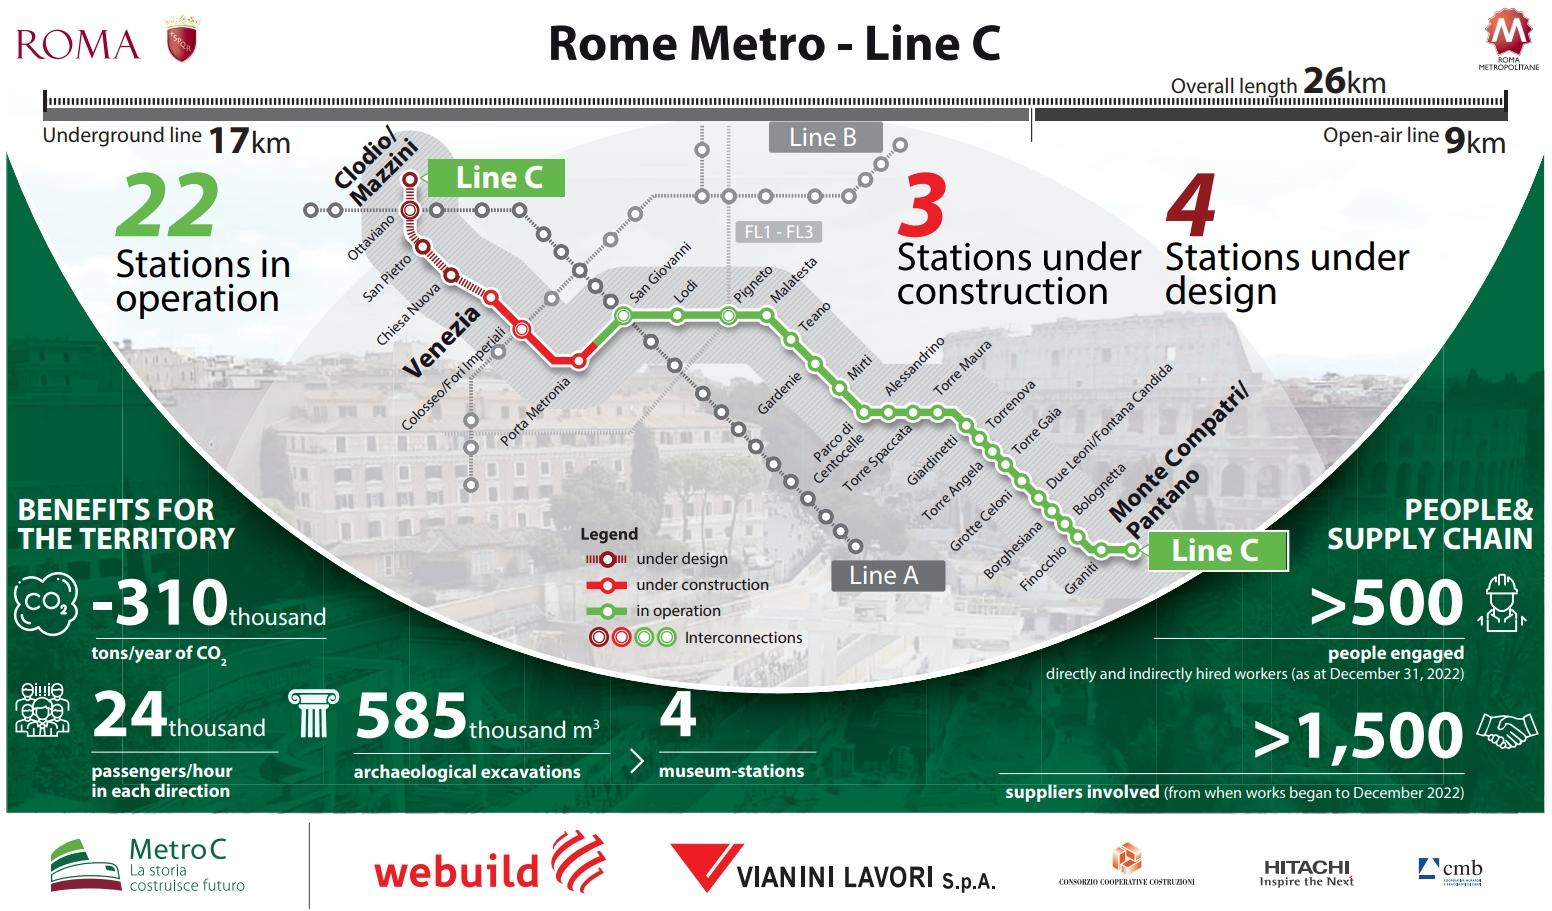 Rome Metro - Line C project infographic - Webuild